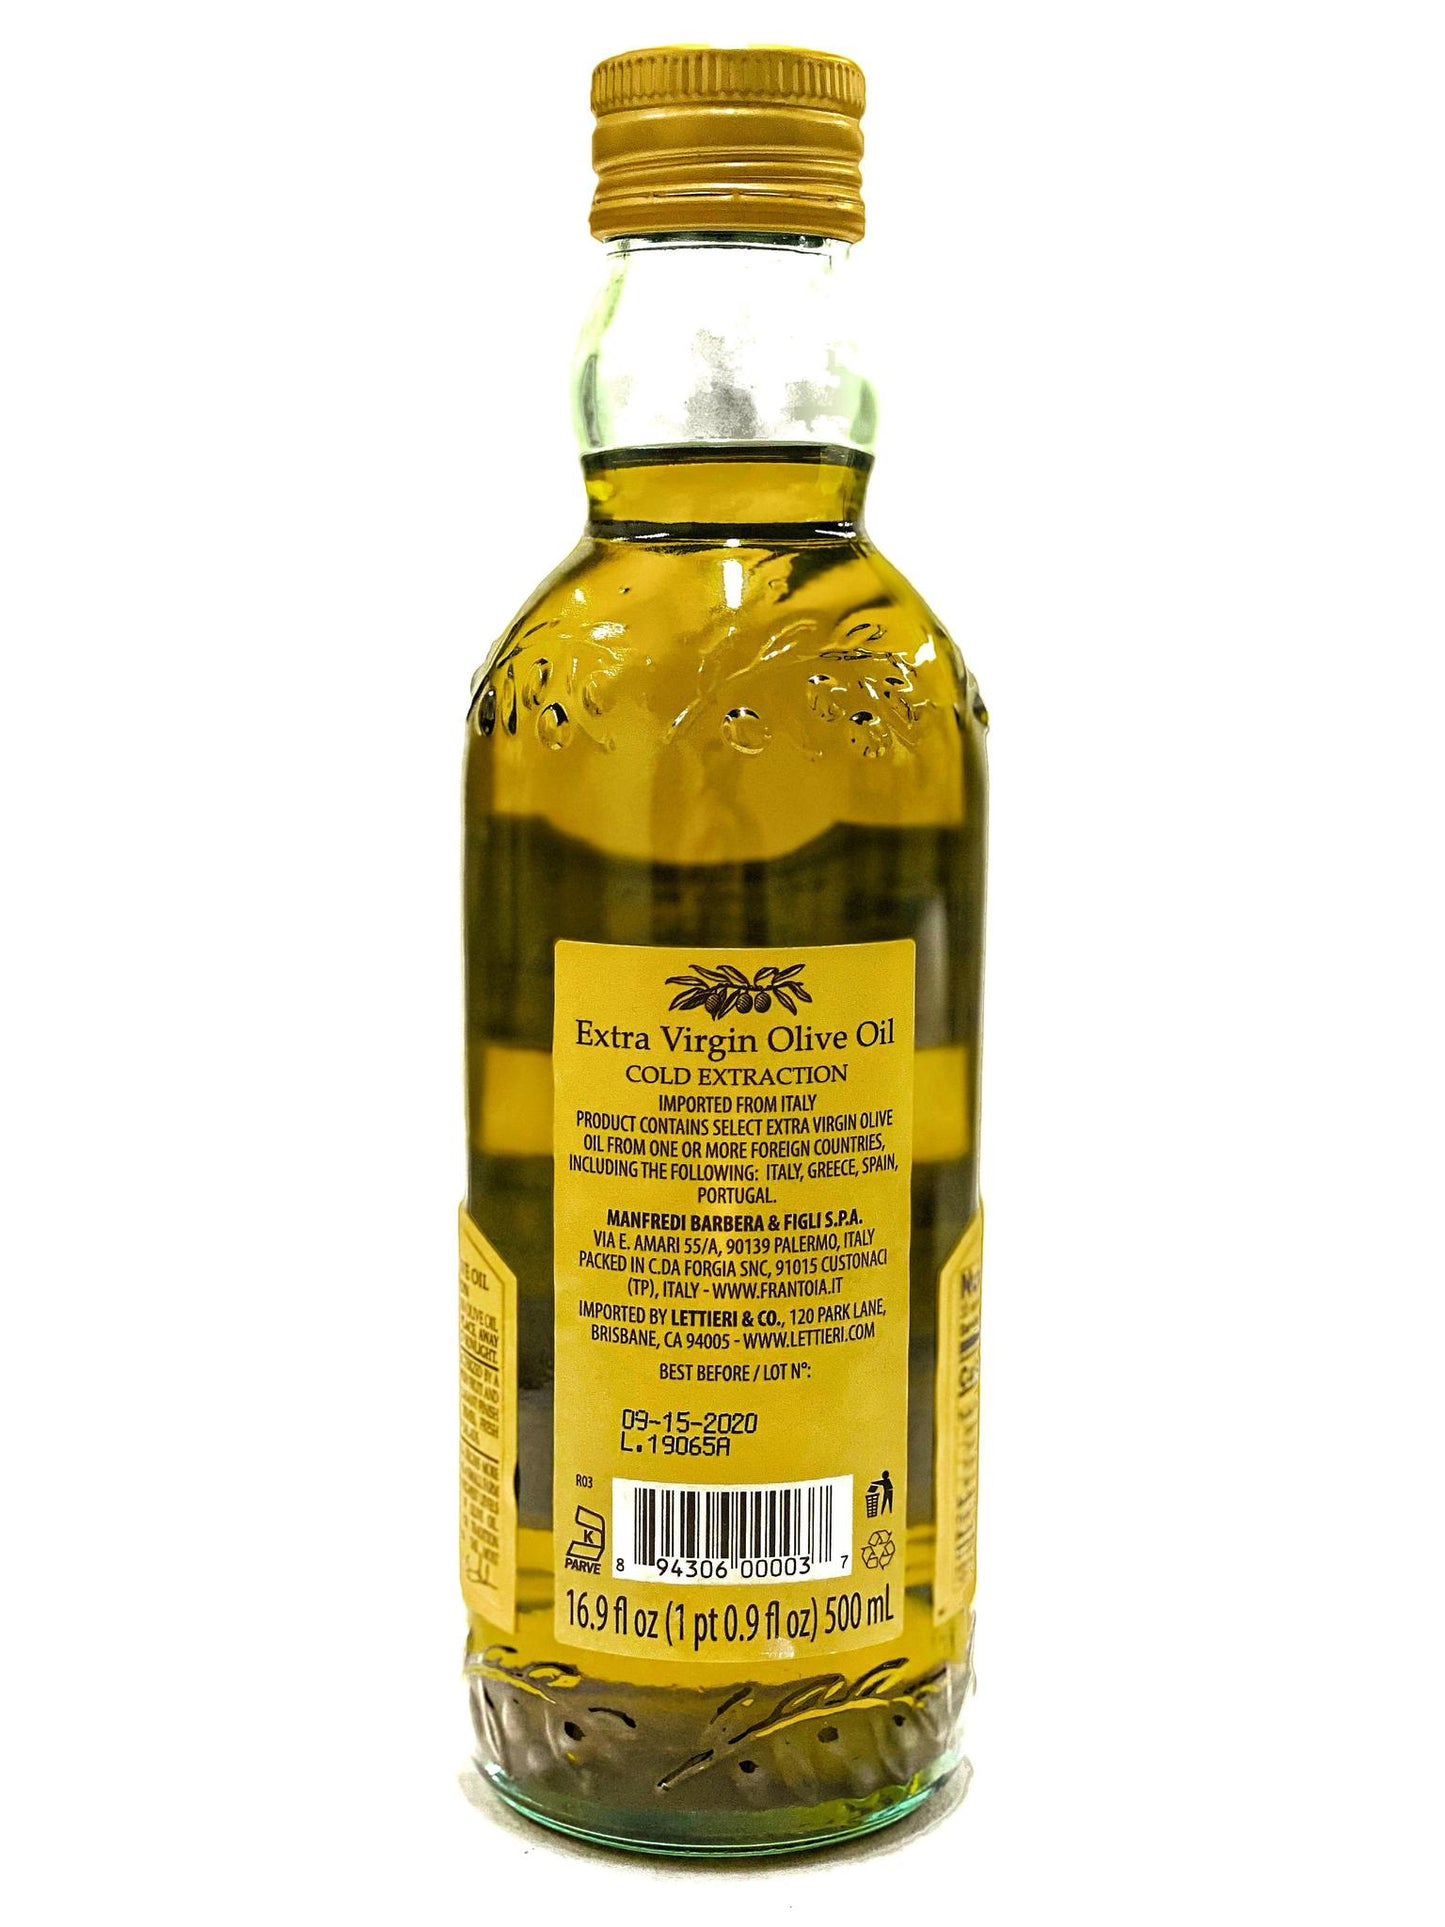 Oleific Frantoia Extra Virgin Olive Oil, 16.9 fl oz